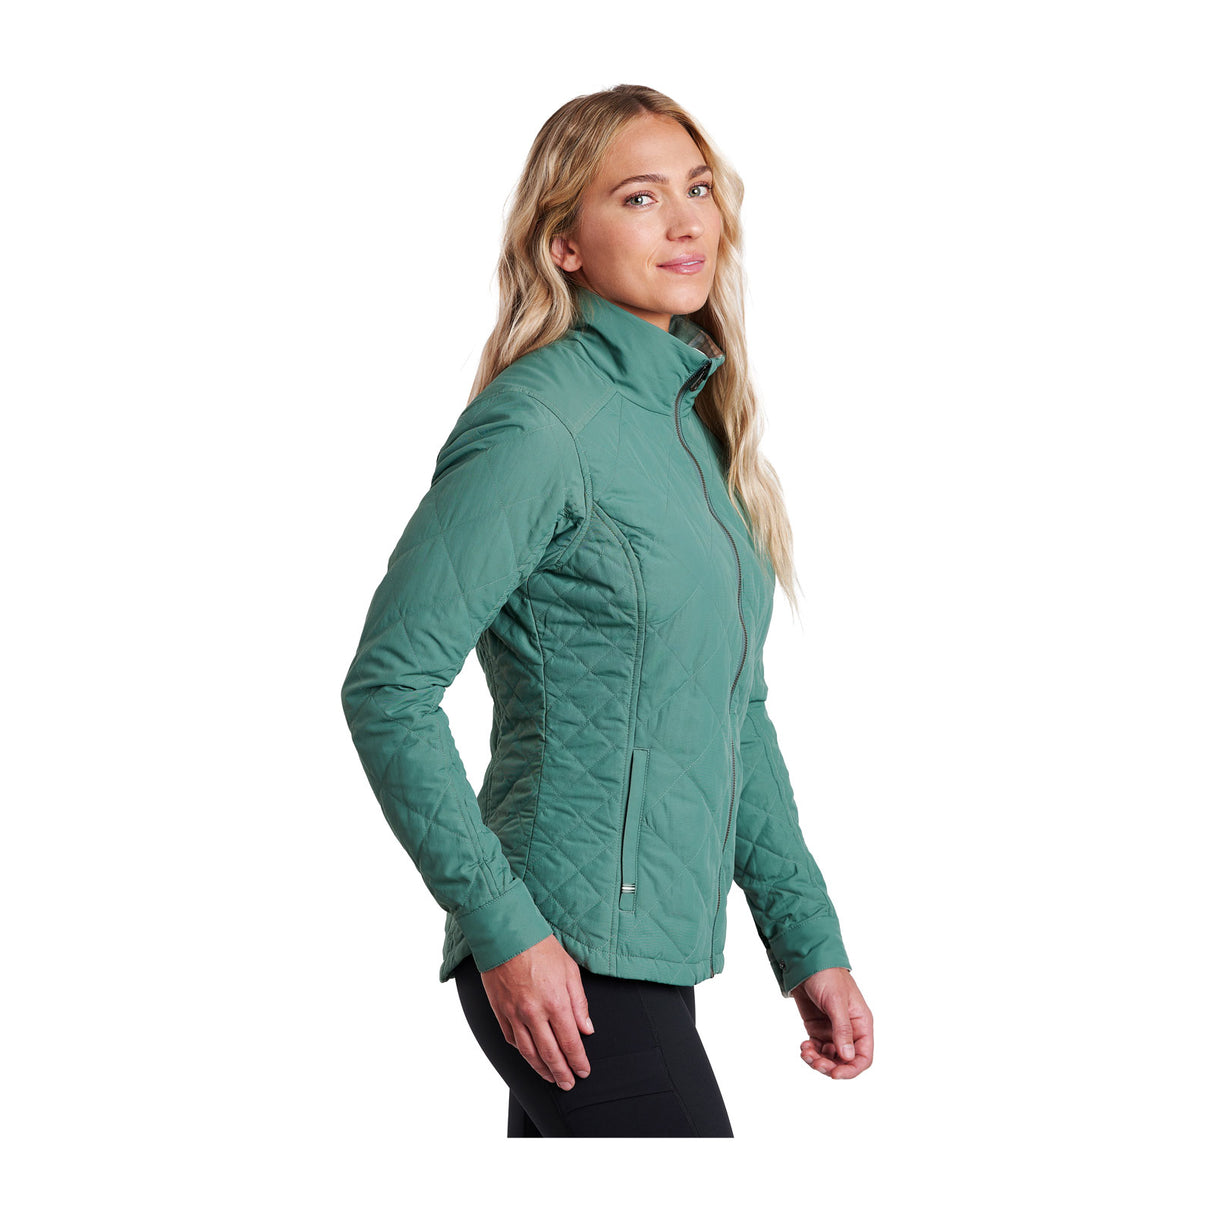 Kuhl Stunnr Insulated Jacket (Women) Evergreen Apparel - Jacket - Lightweight - The Heel Shoe Fitters